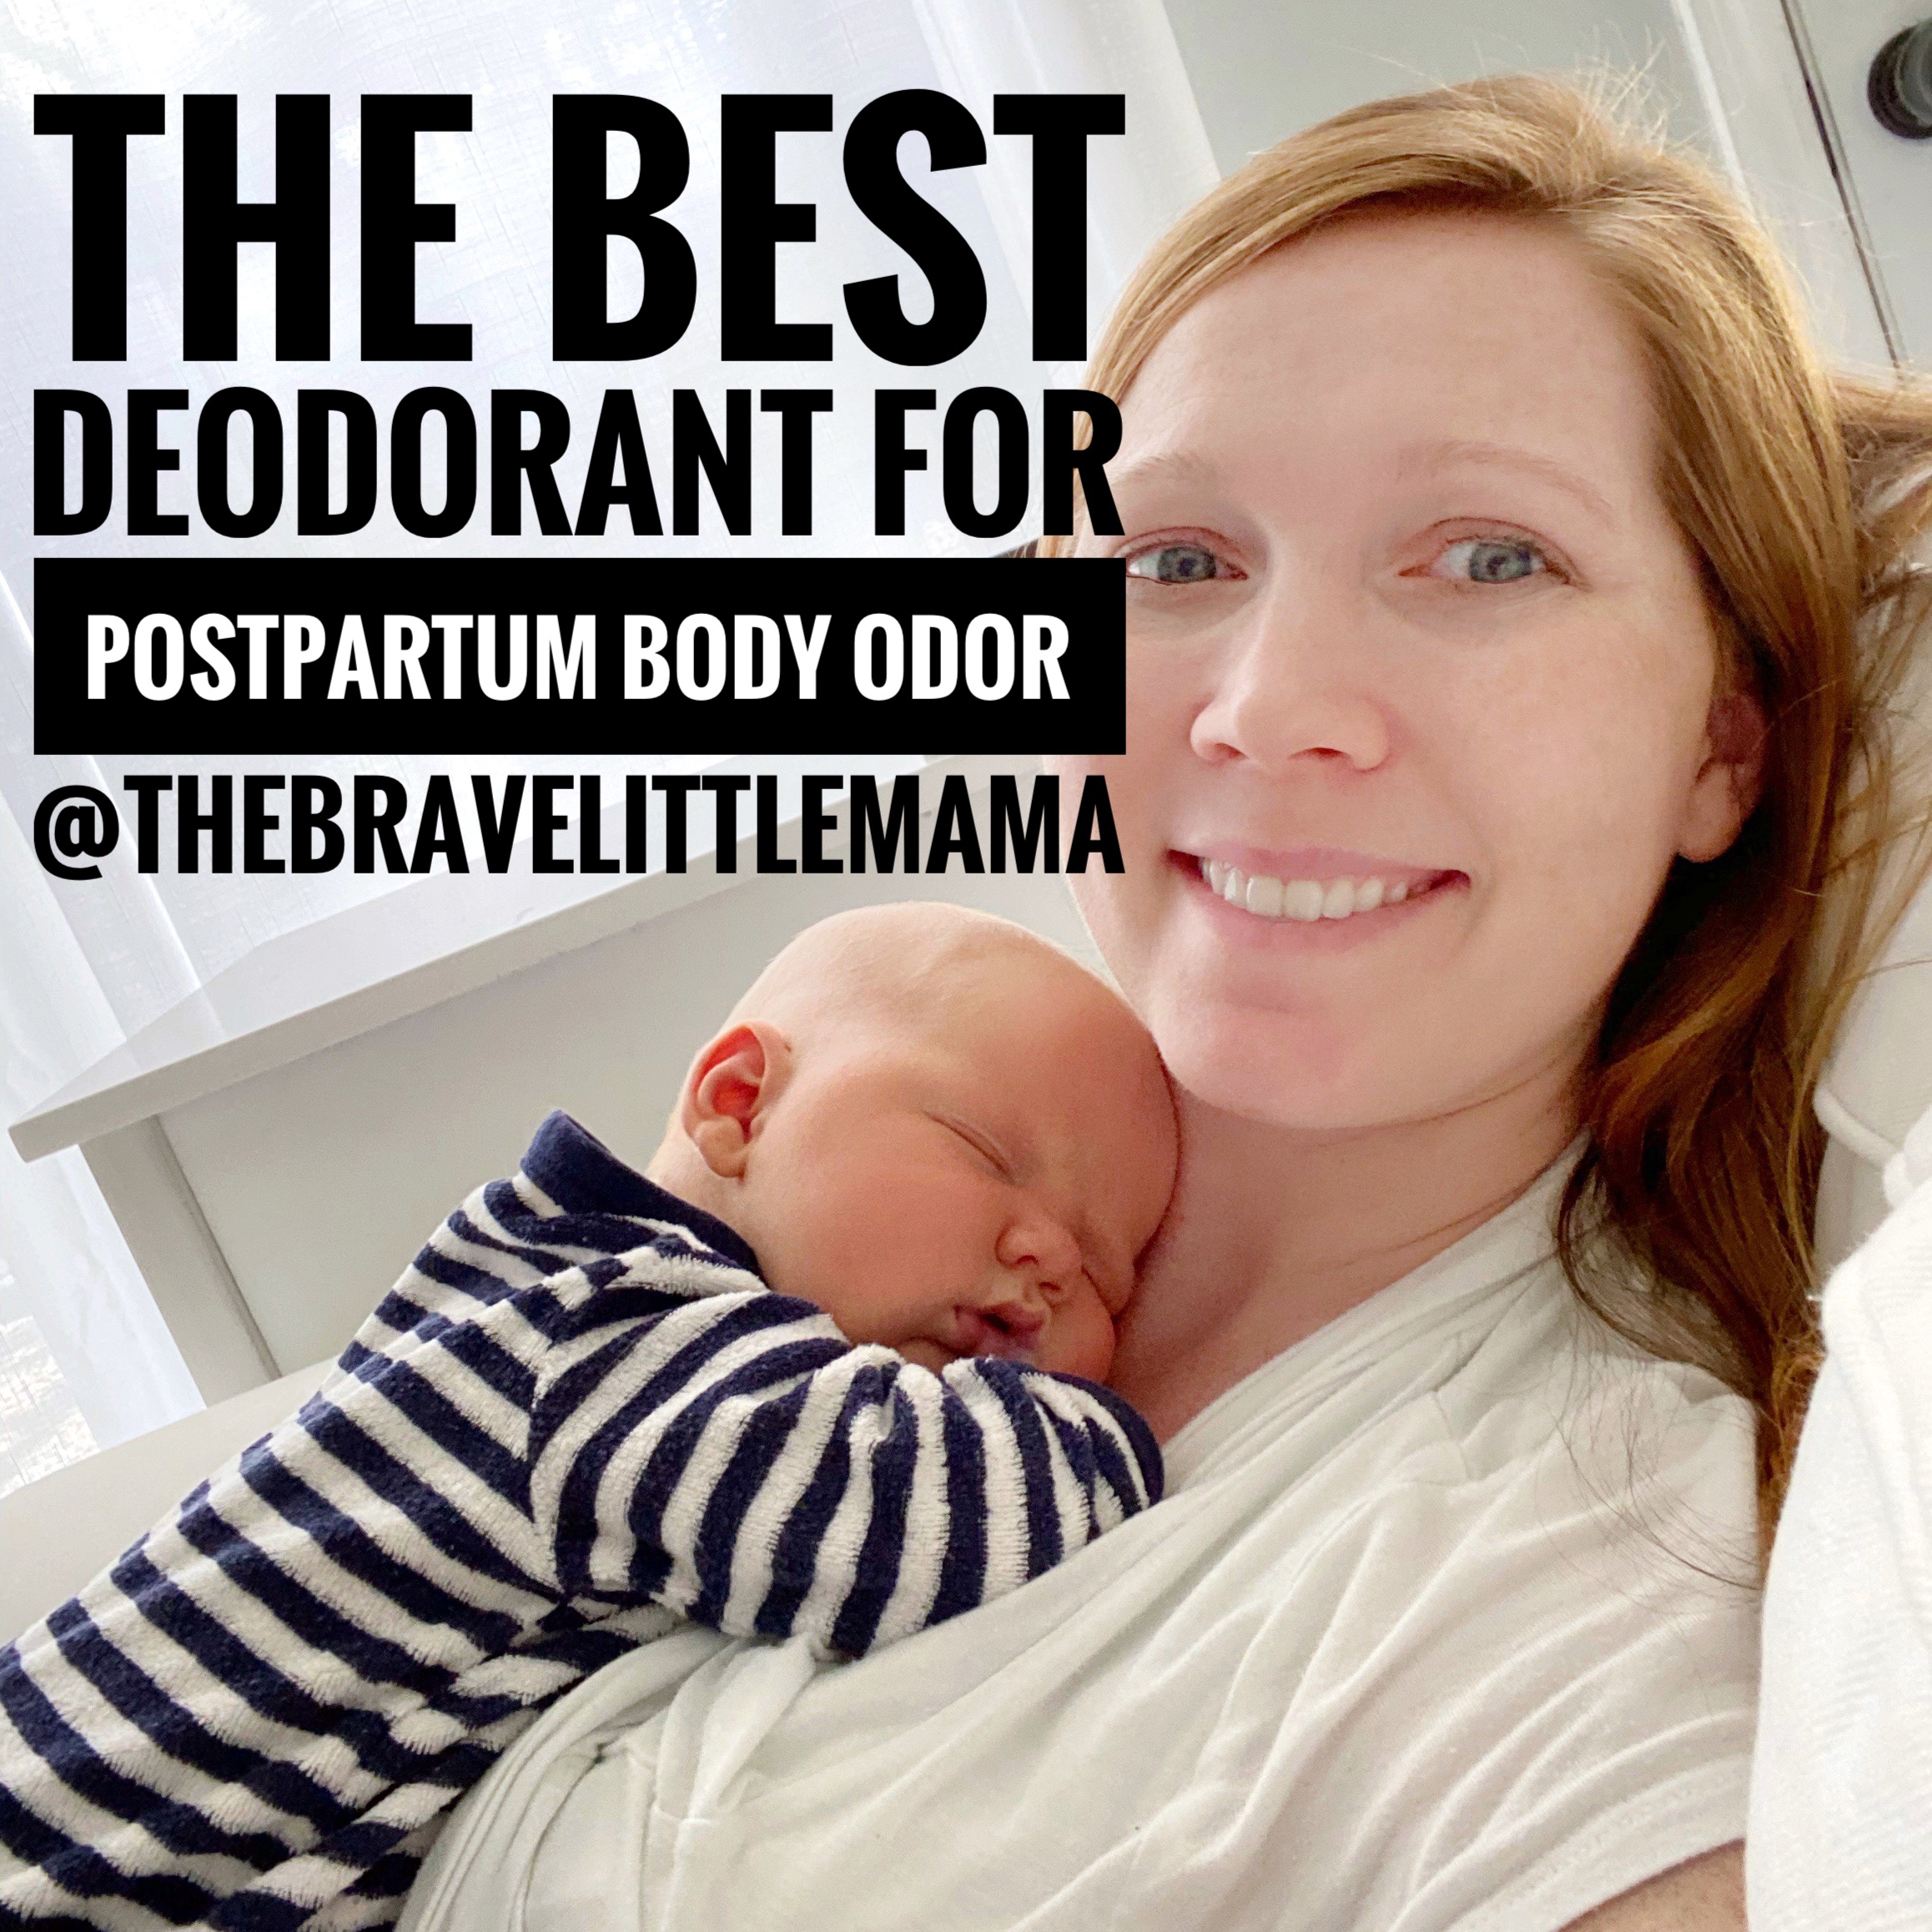 The BEST Deodorant For Postpartum Body Odor